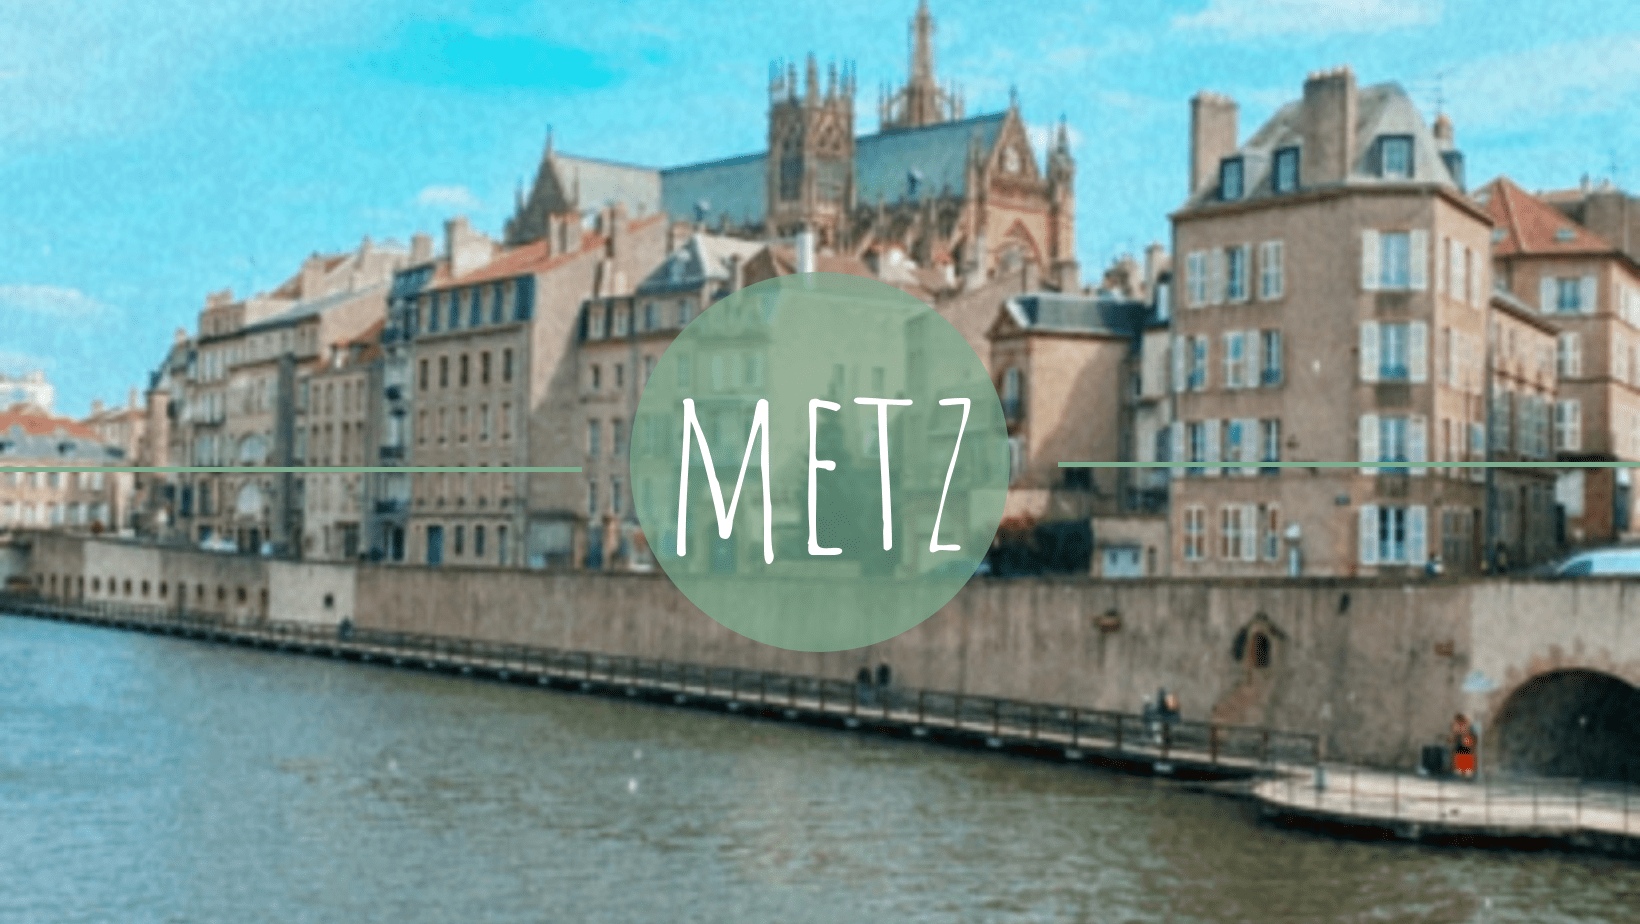 Titel Metz